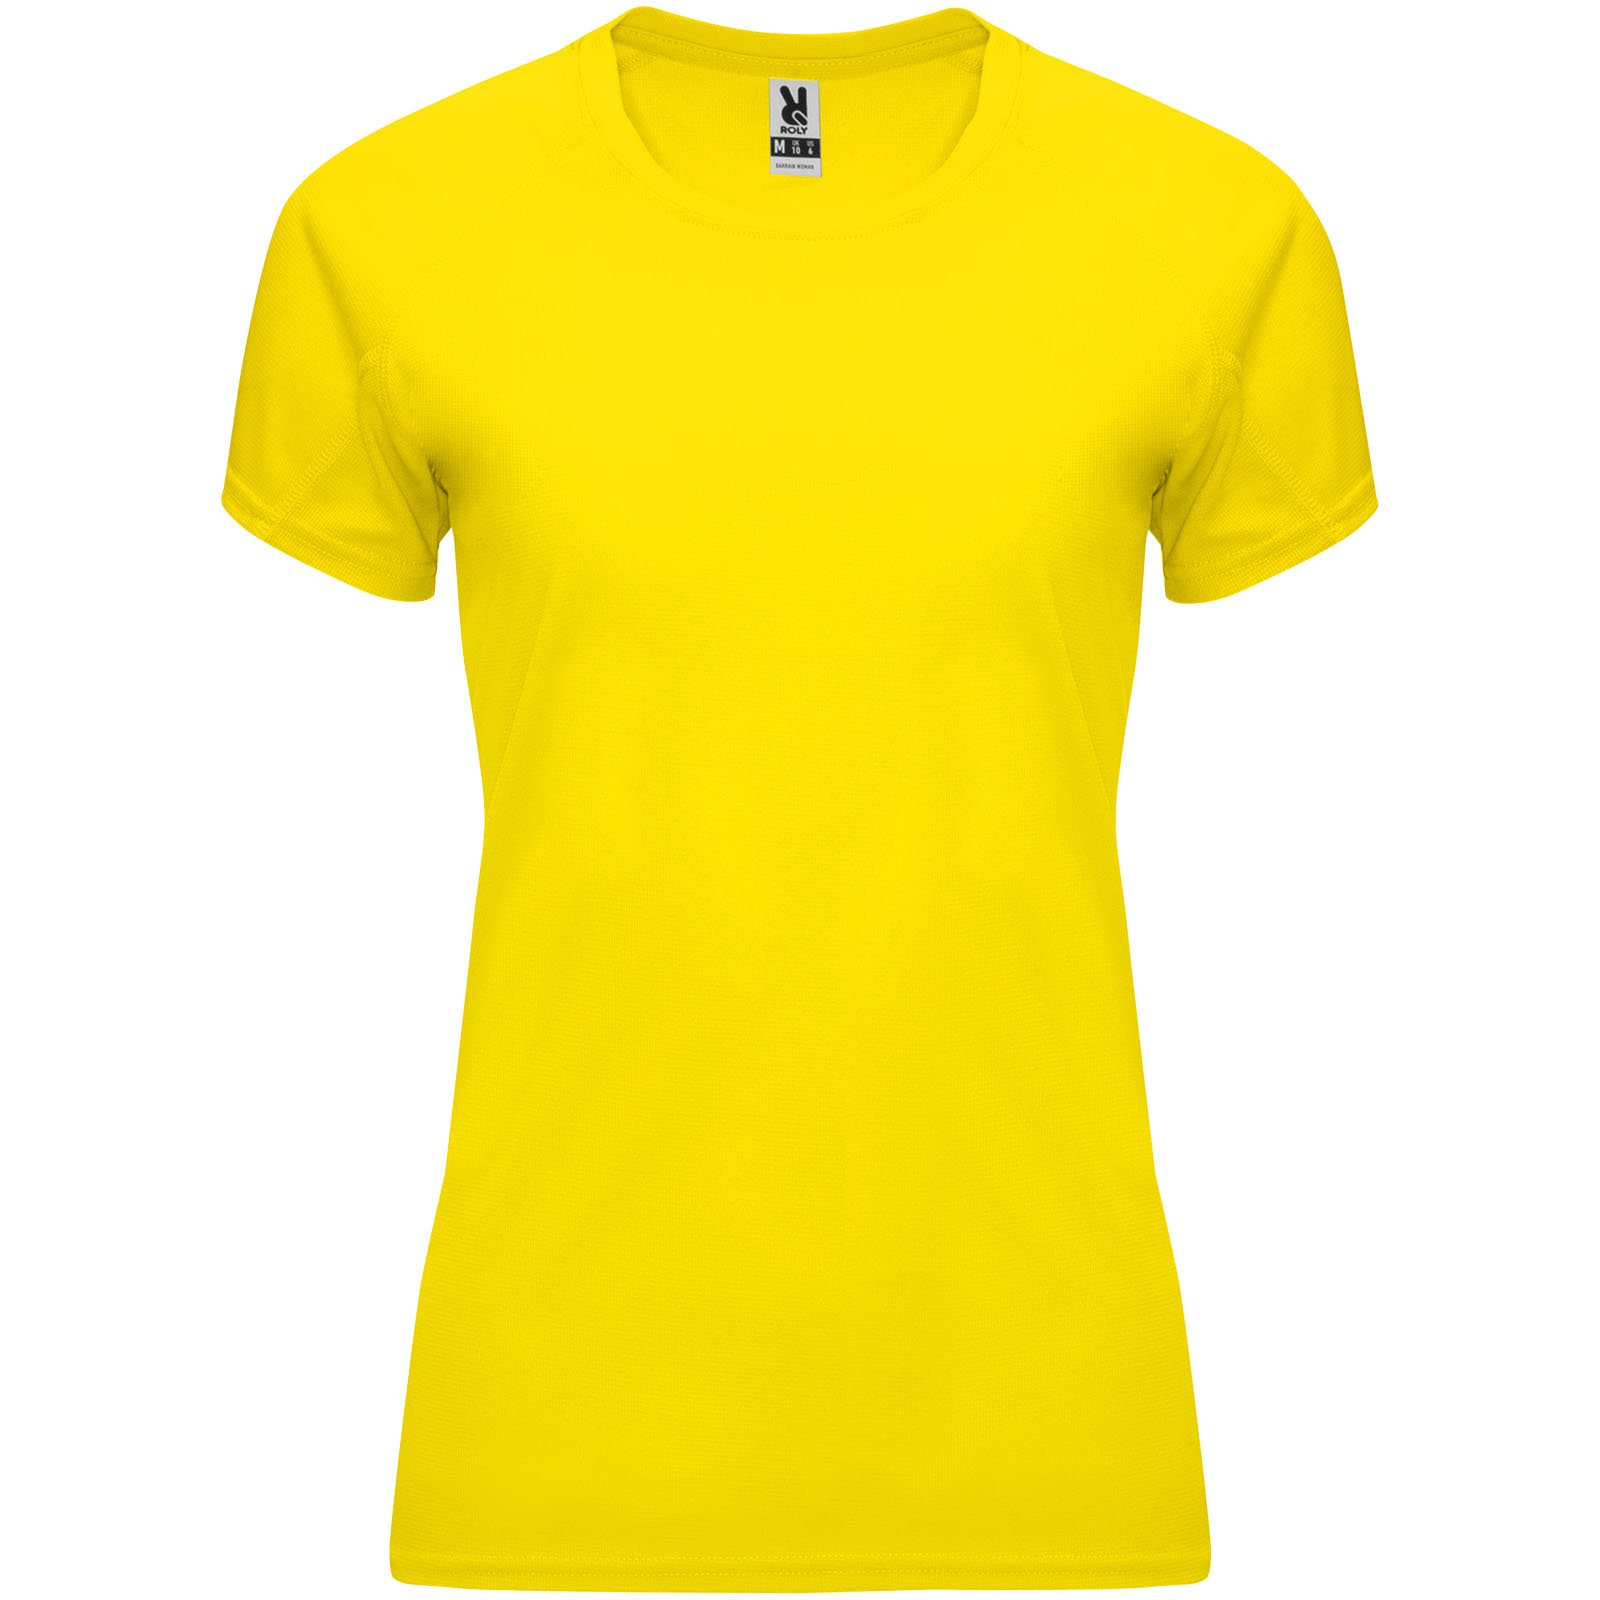 Advertising T-shirts - Bahrain short sleeve women's sports t-shirt